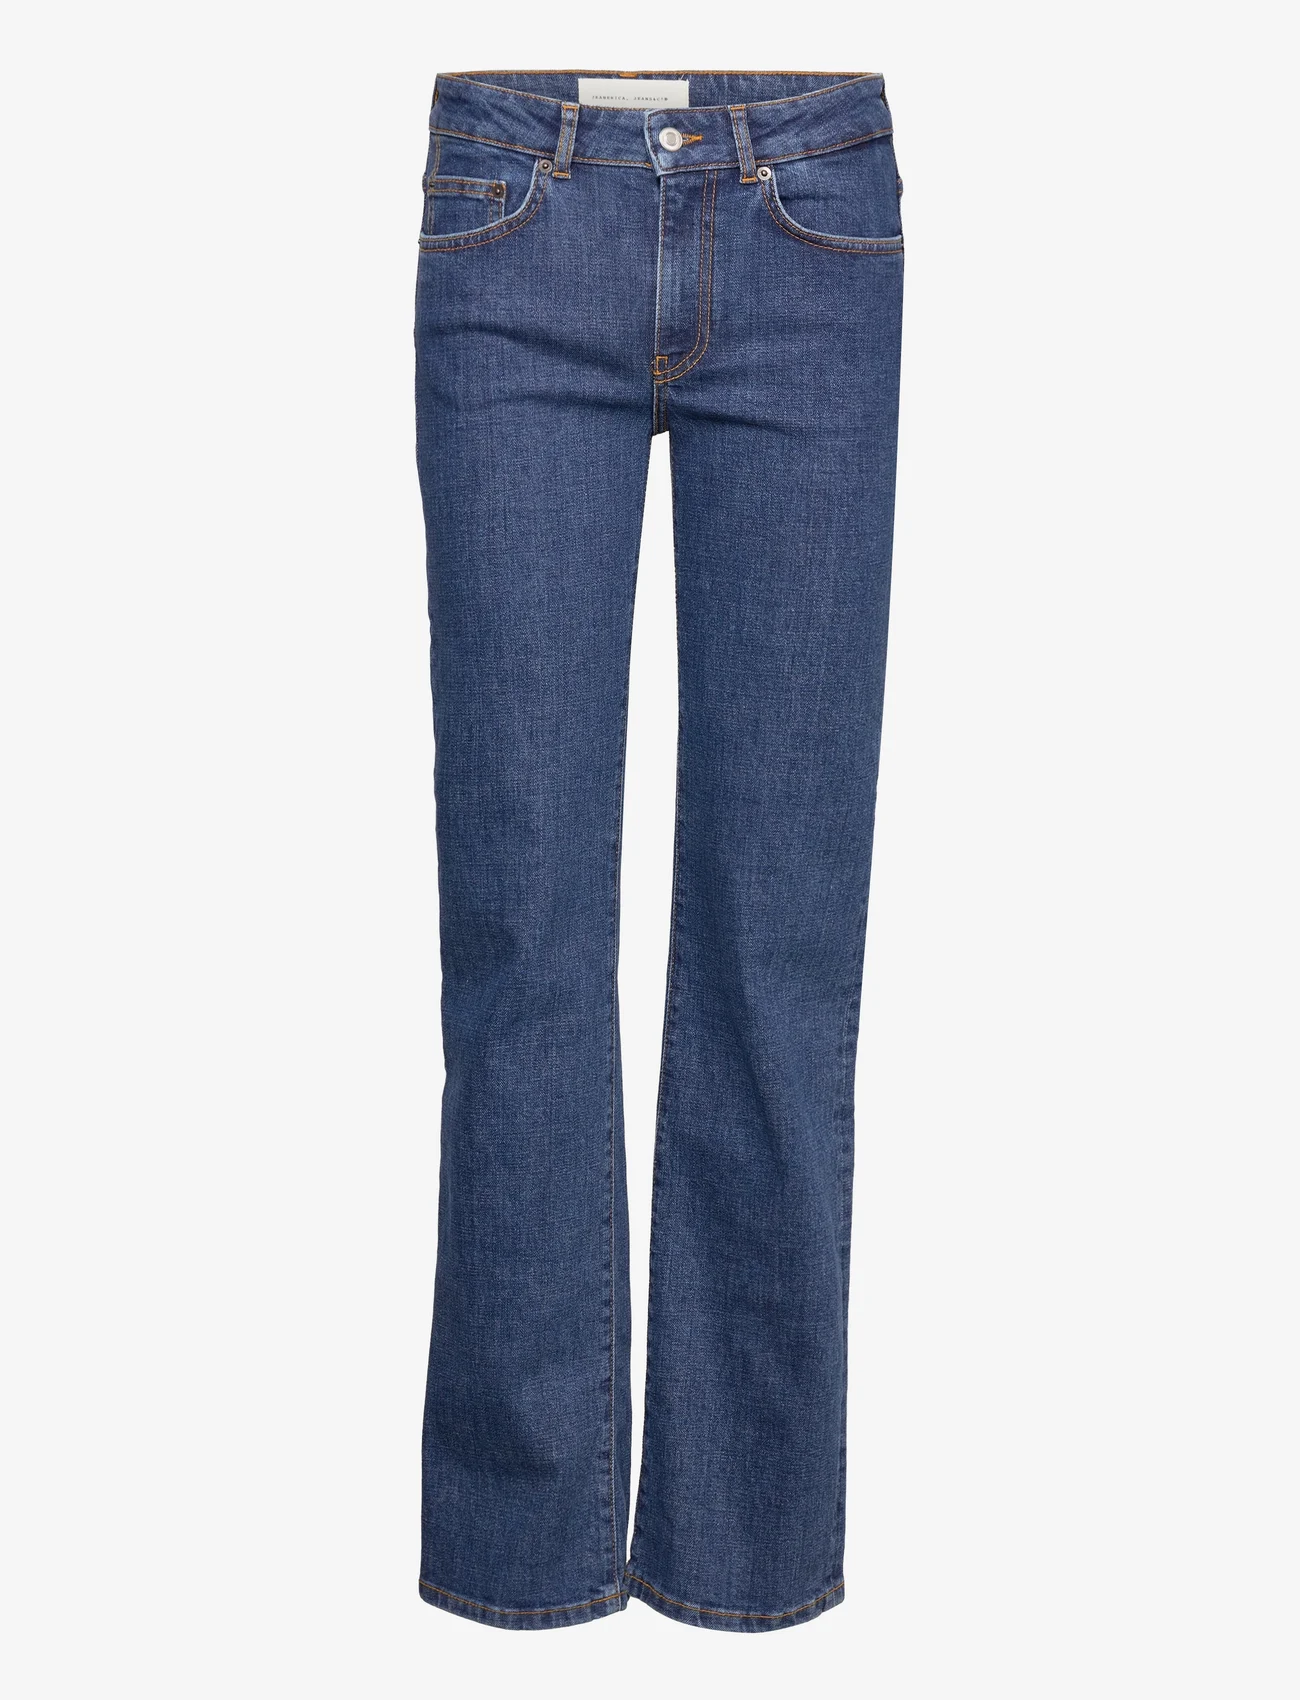 Jeanerica - EW009 Eiffel Low Jeans - proste dżinsy - vintage 95 - 0